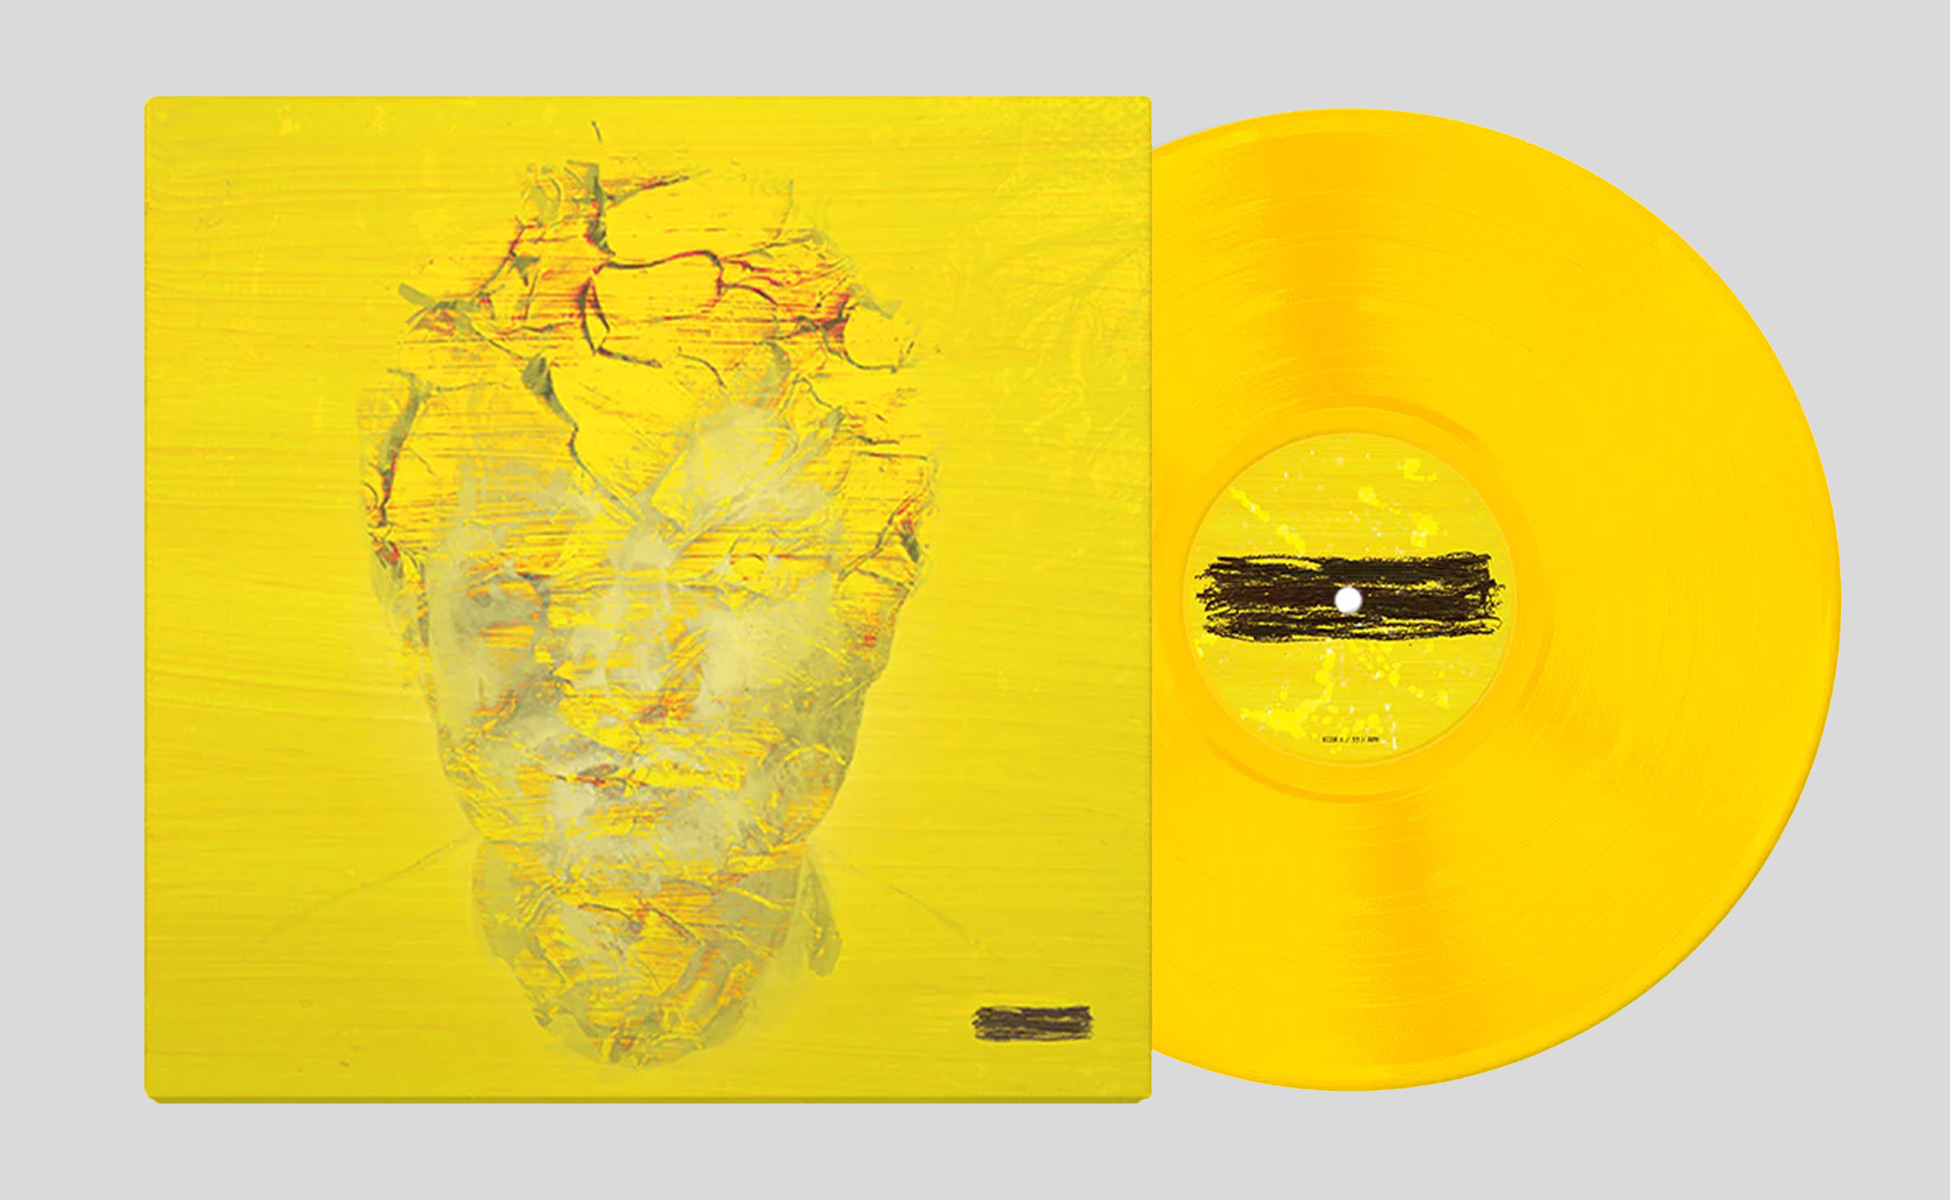 ed-sheeran-vinyle-jaune-substract-monochrome